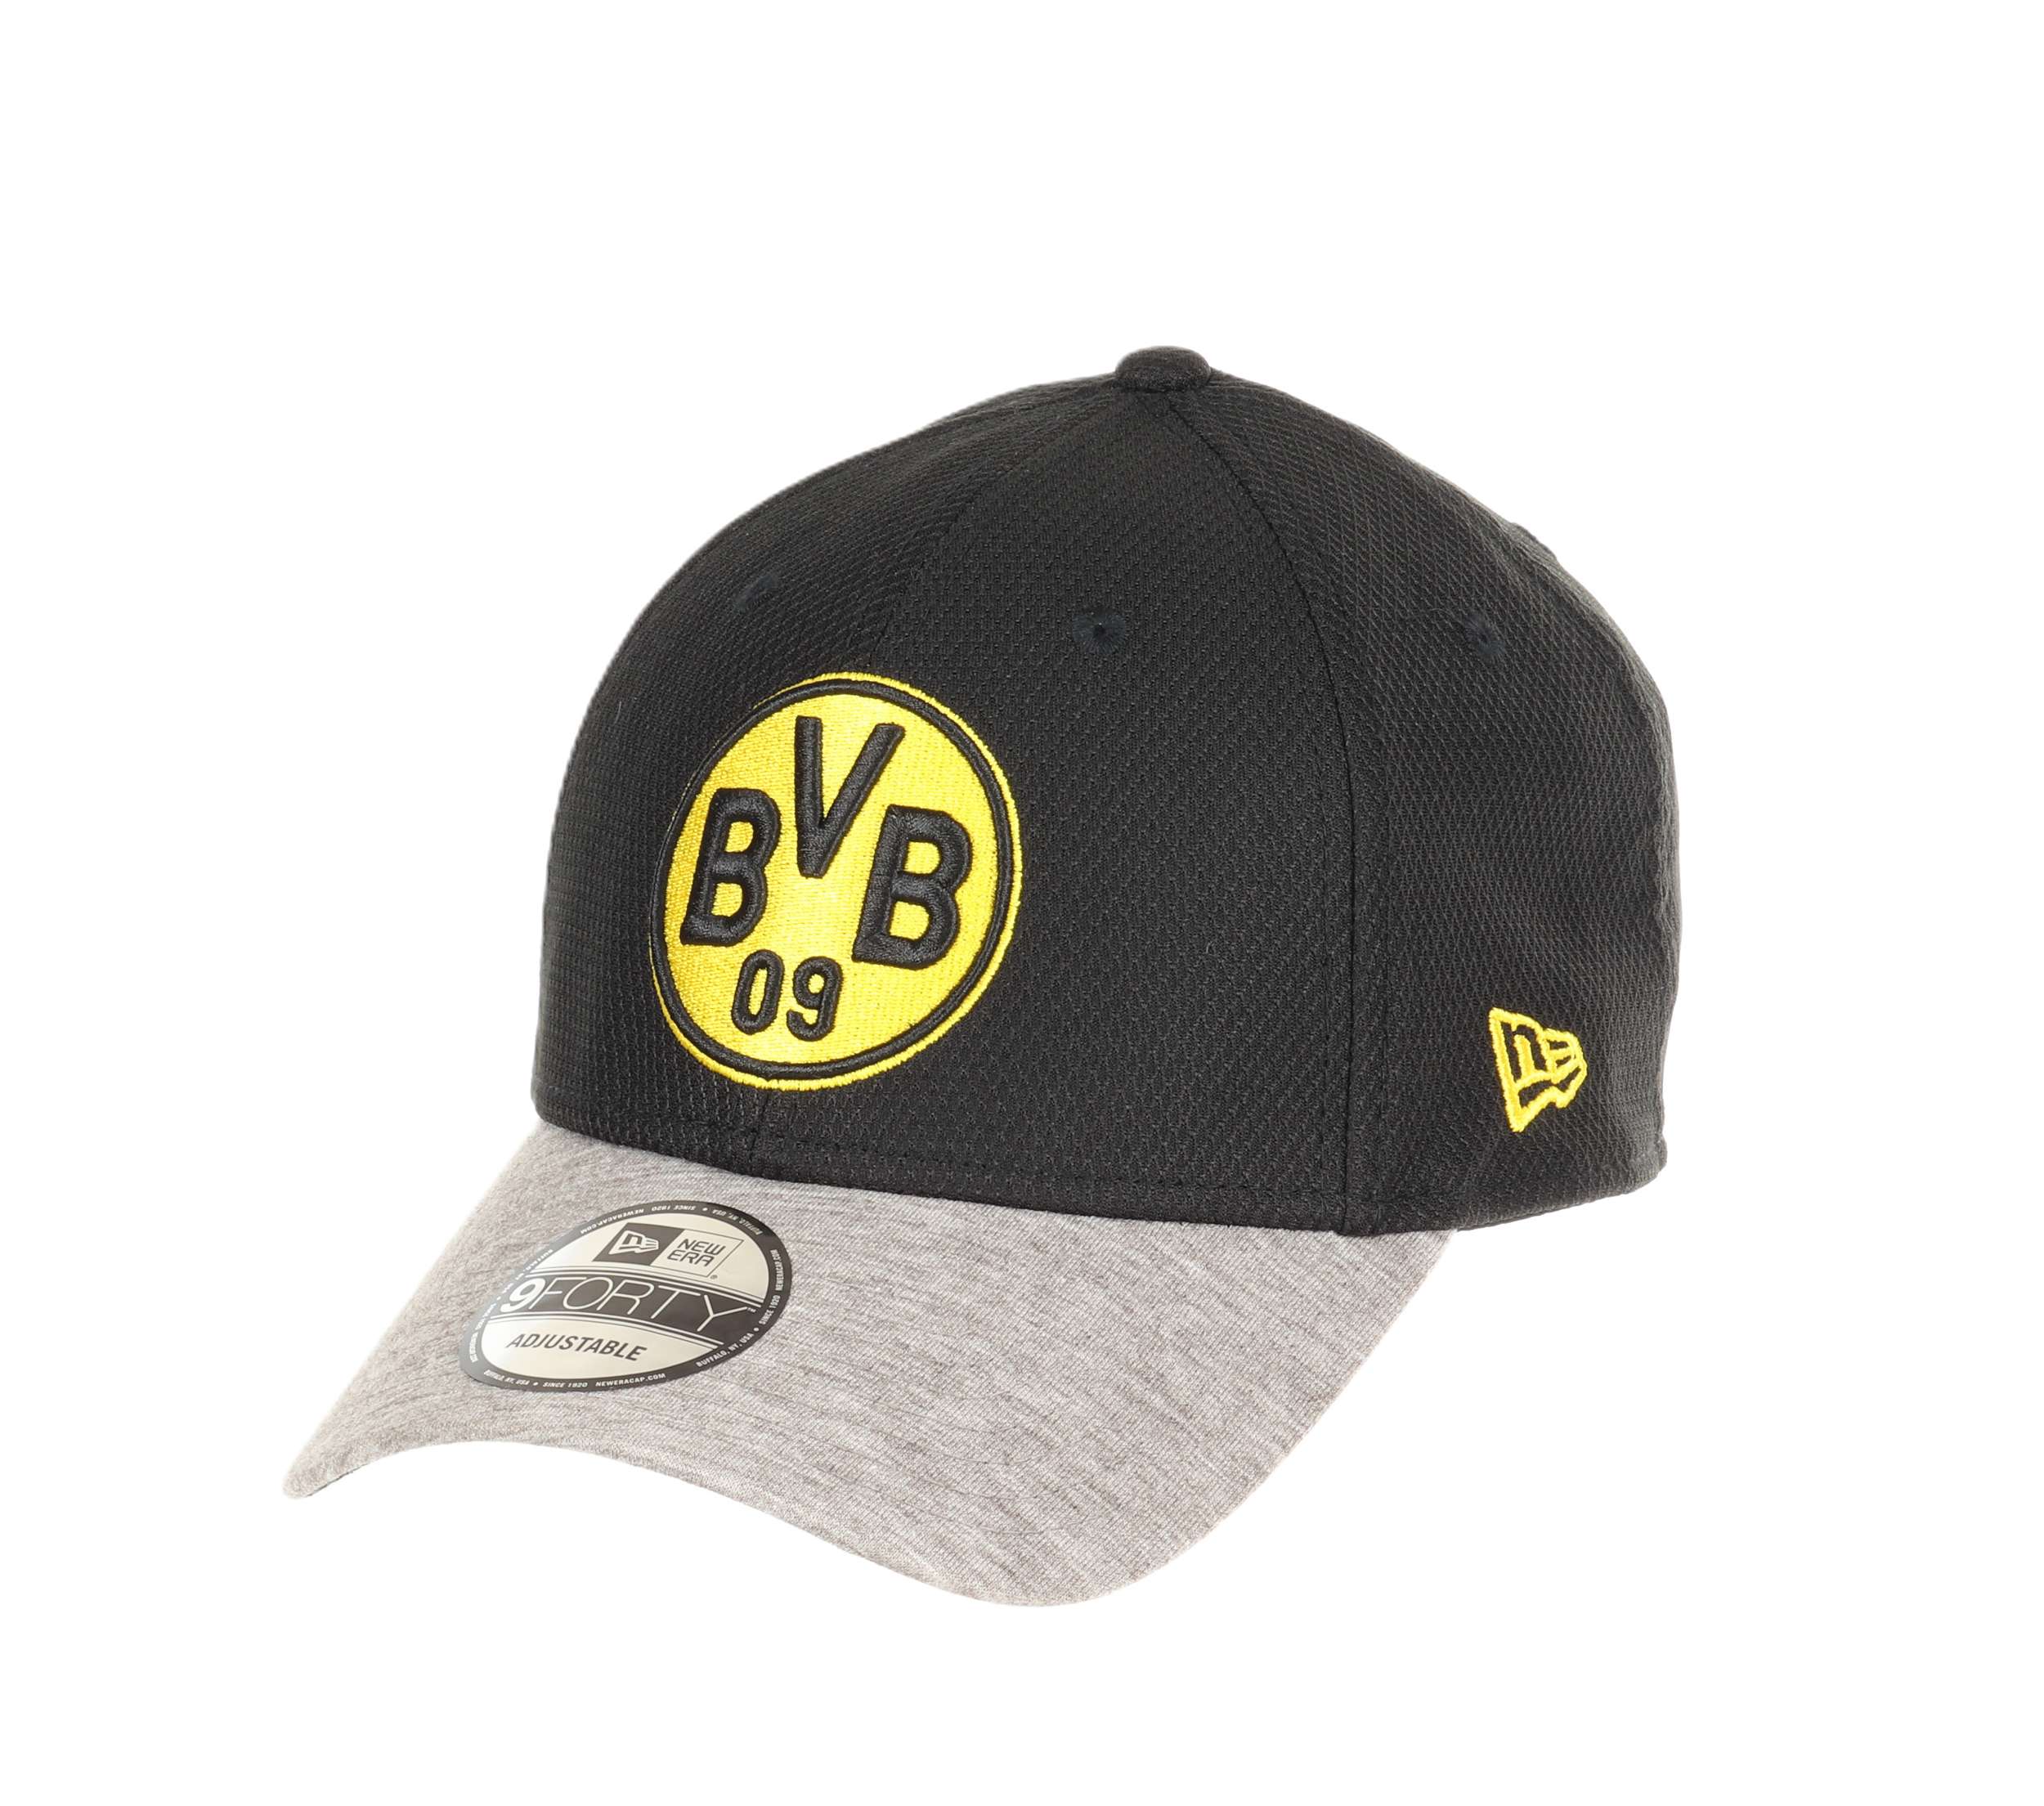 BVB 09 Borussia Dortmund Black Grey 9Forty Adjustable Cap New Era